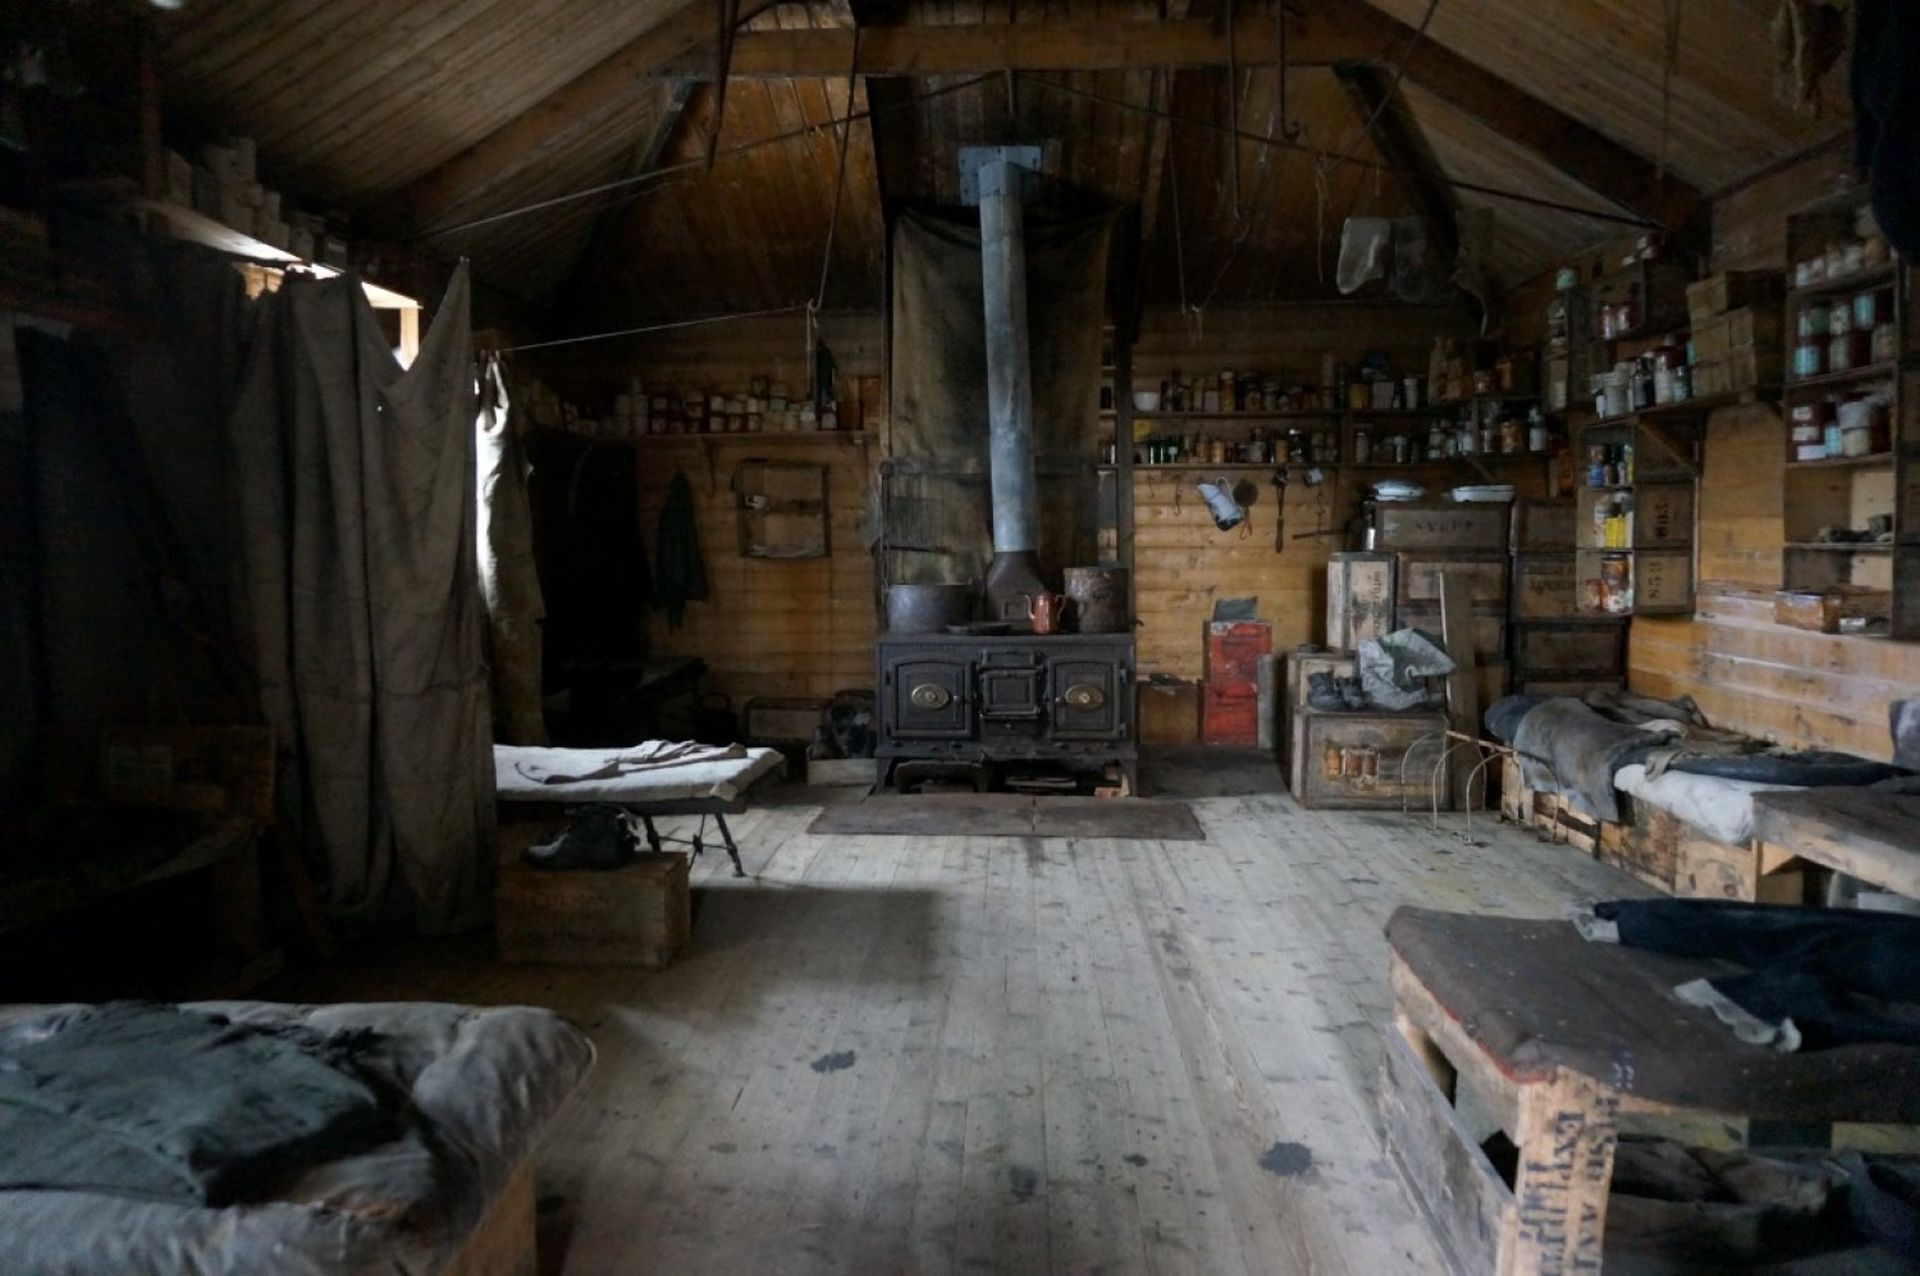 The interior of Shackleton's Hut.